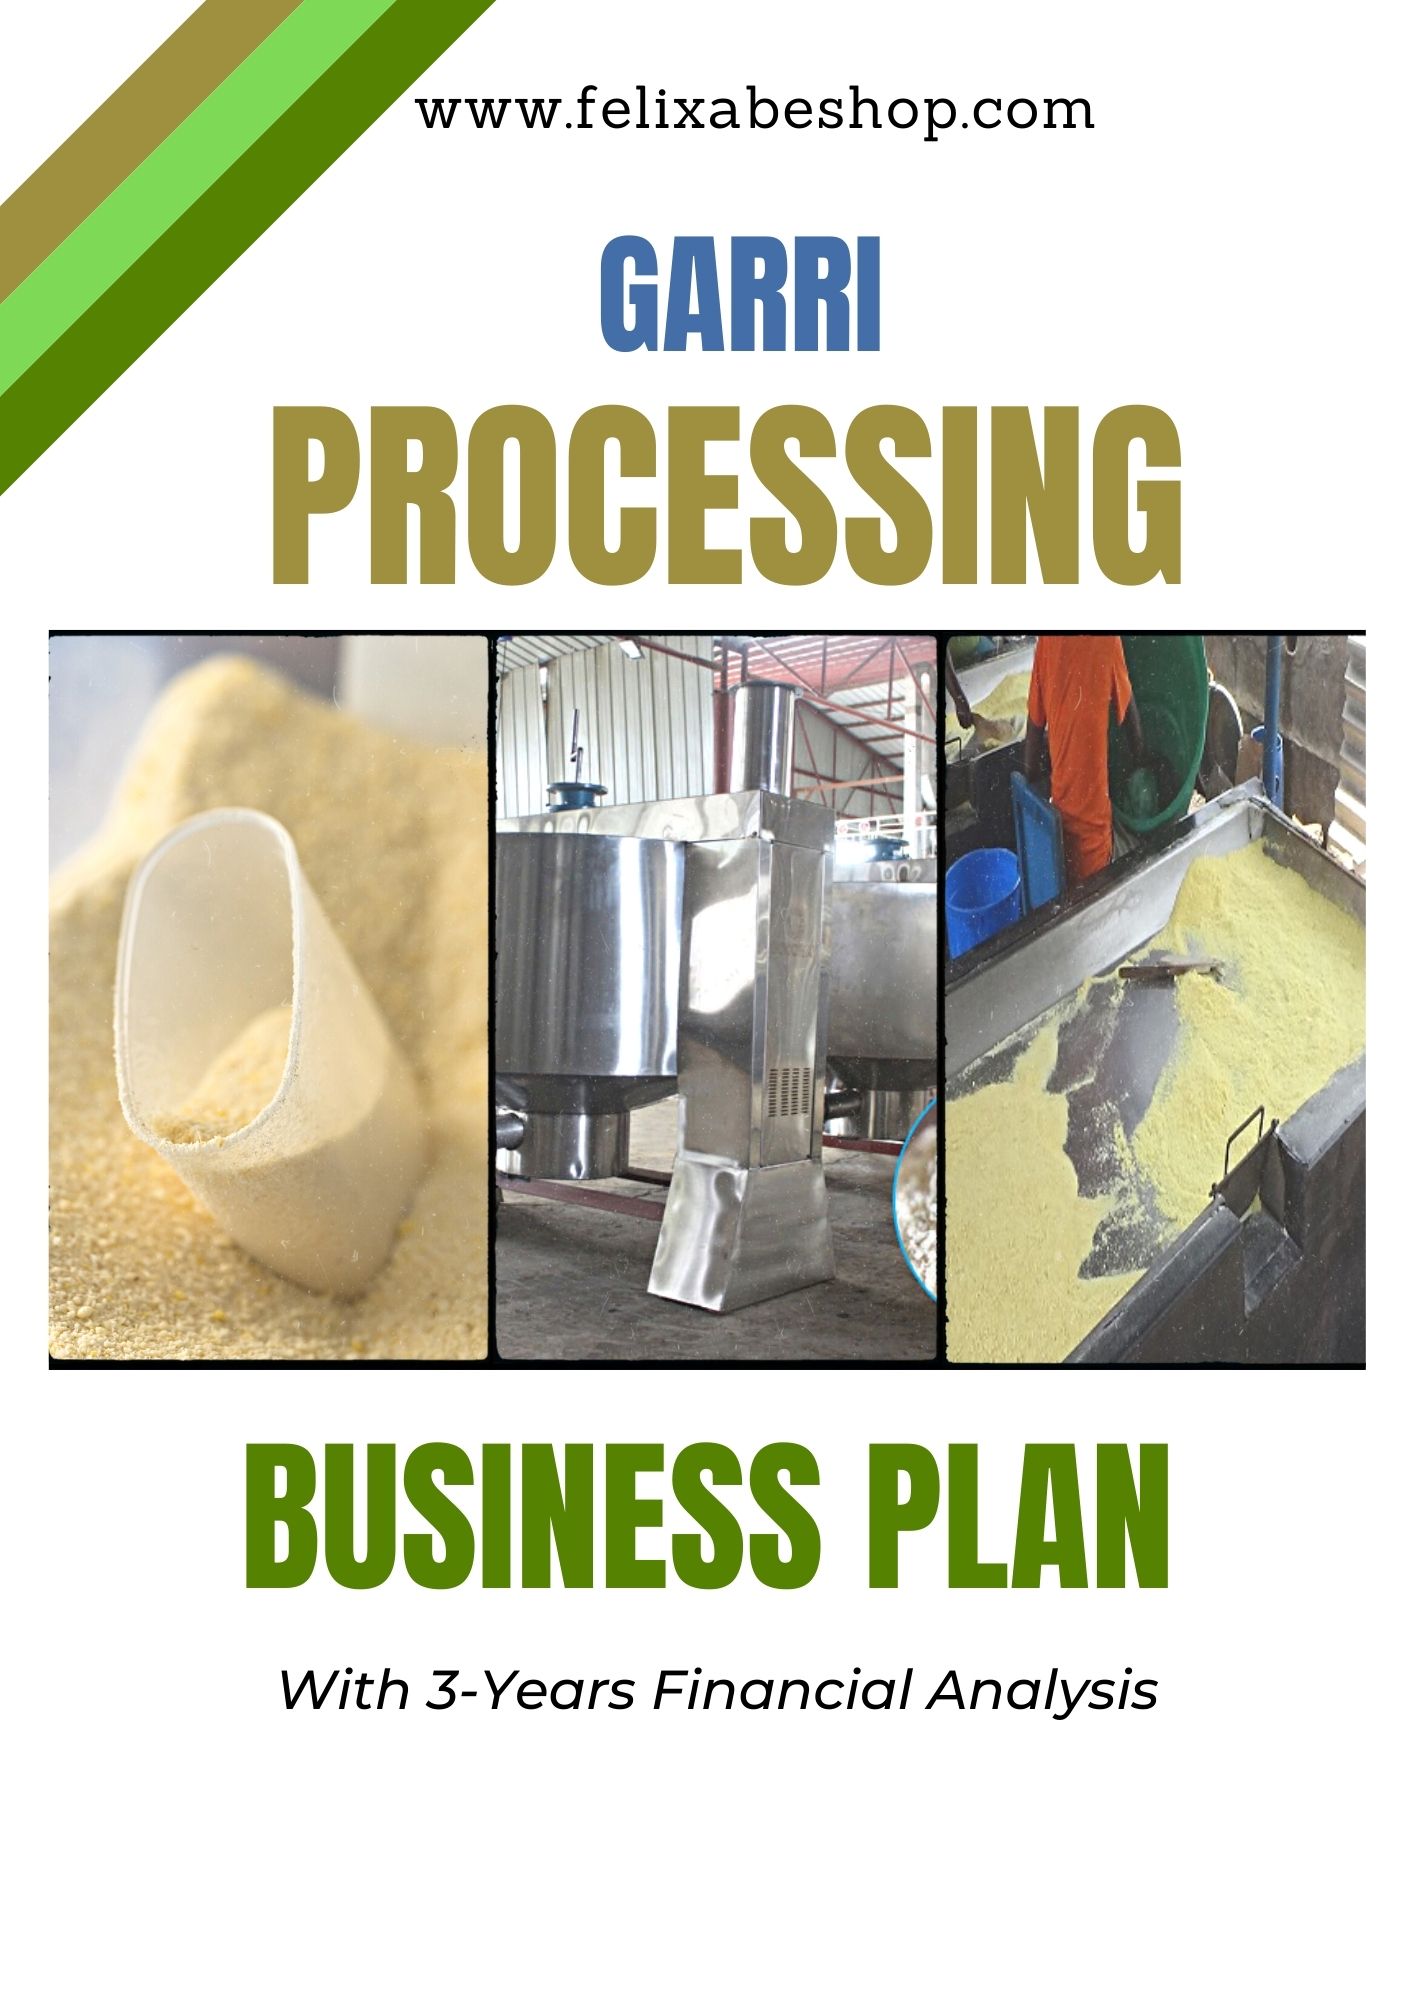 garri processing business plan